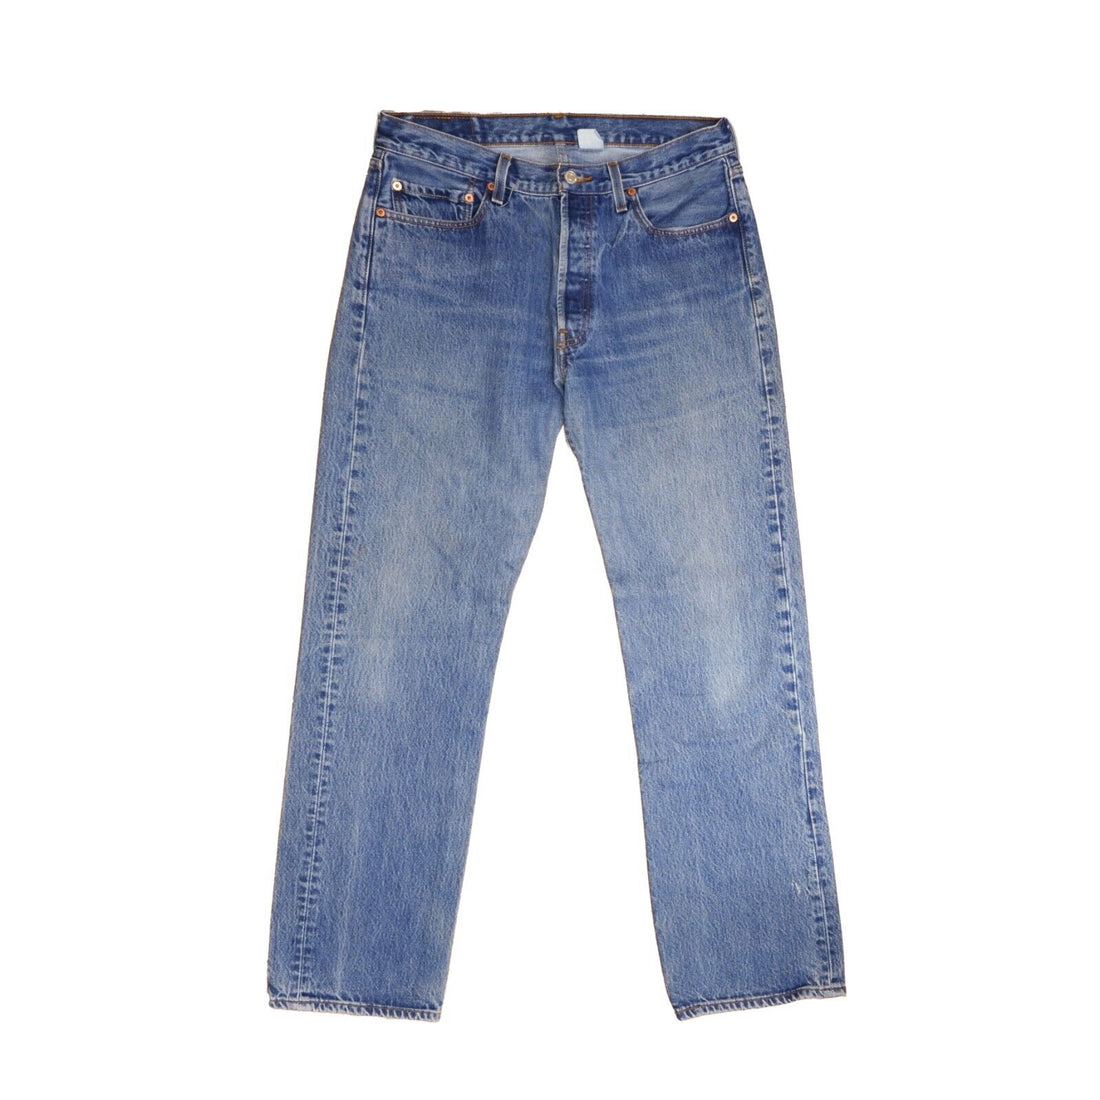 Vintage Levi Strauss & Co 501 Denim Jeans Size 34 X 34 00501-0194